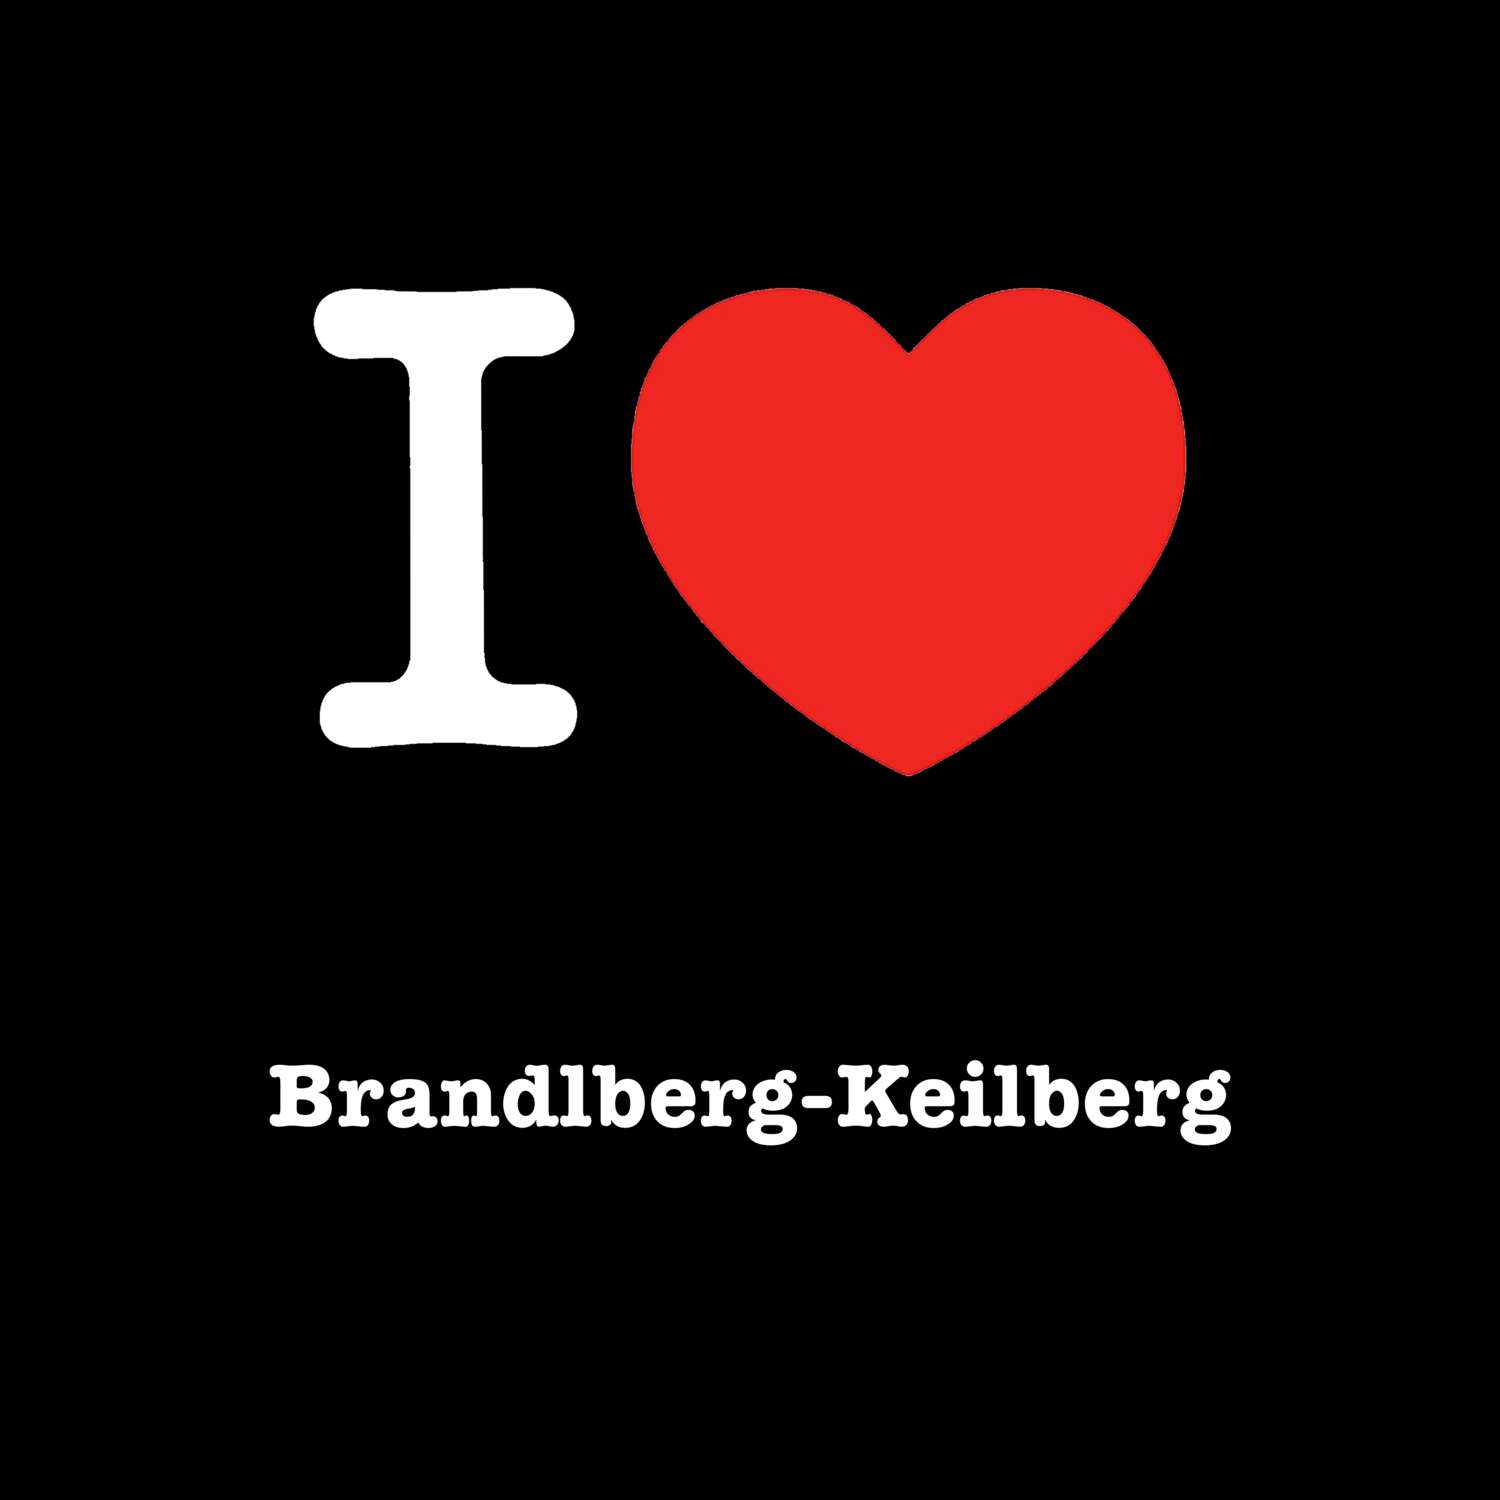 Brandlberg-Keilberg T-Shirt »I love«